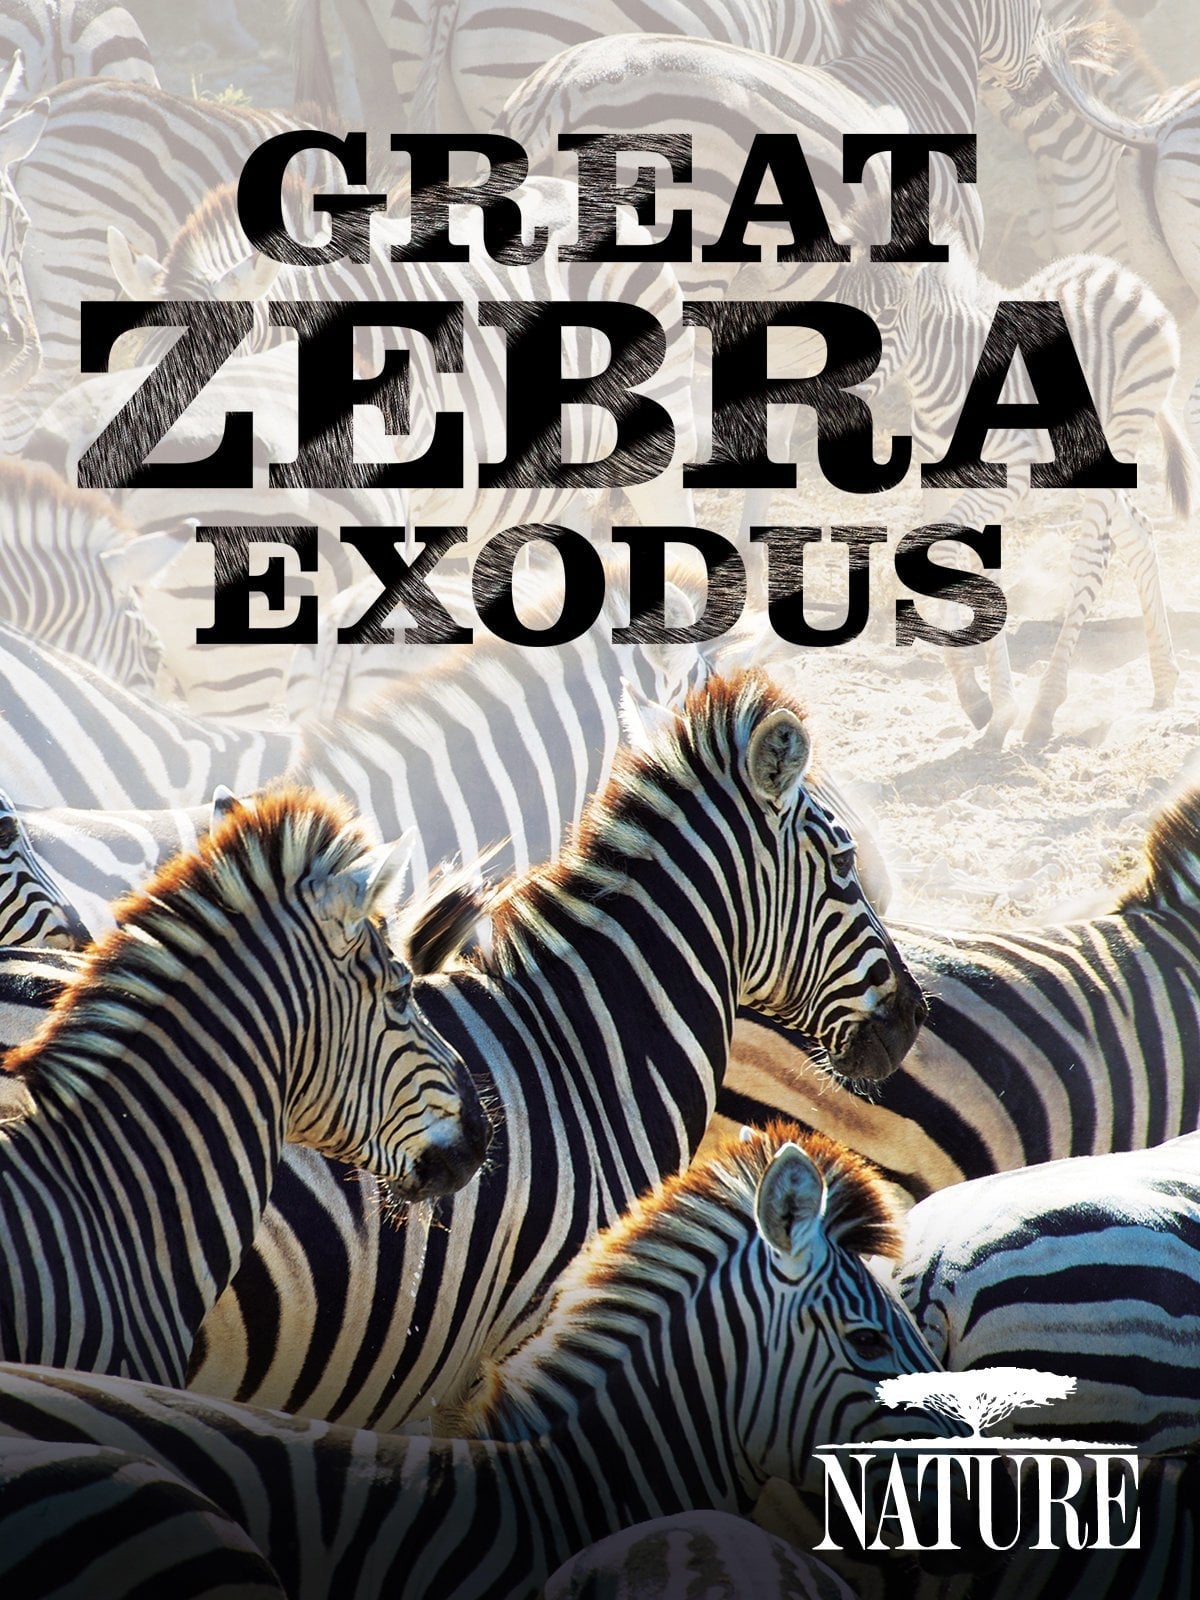 Nature: Great Zebra Exodus